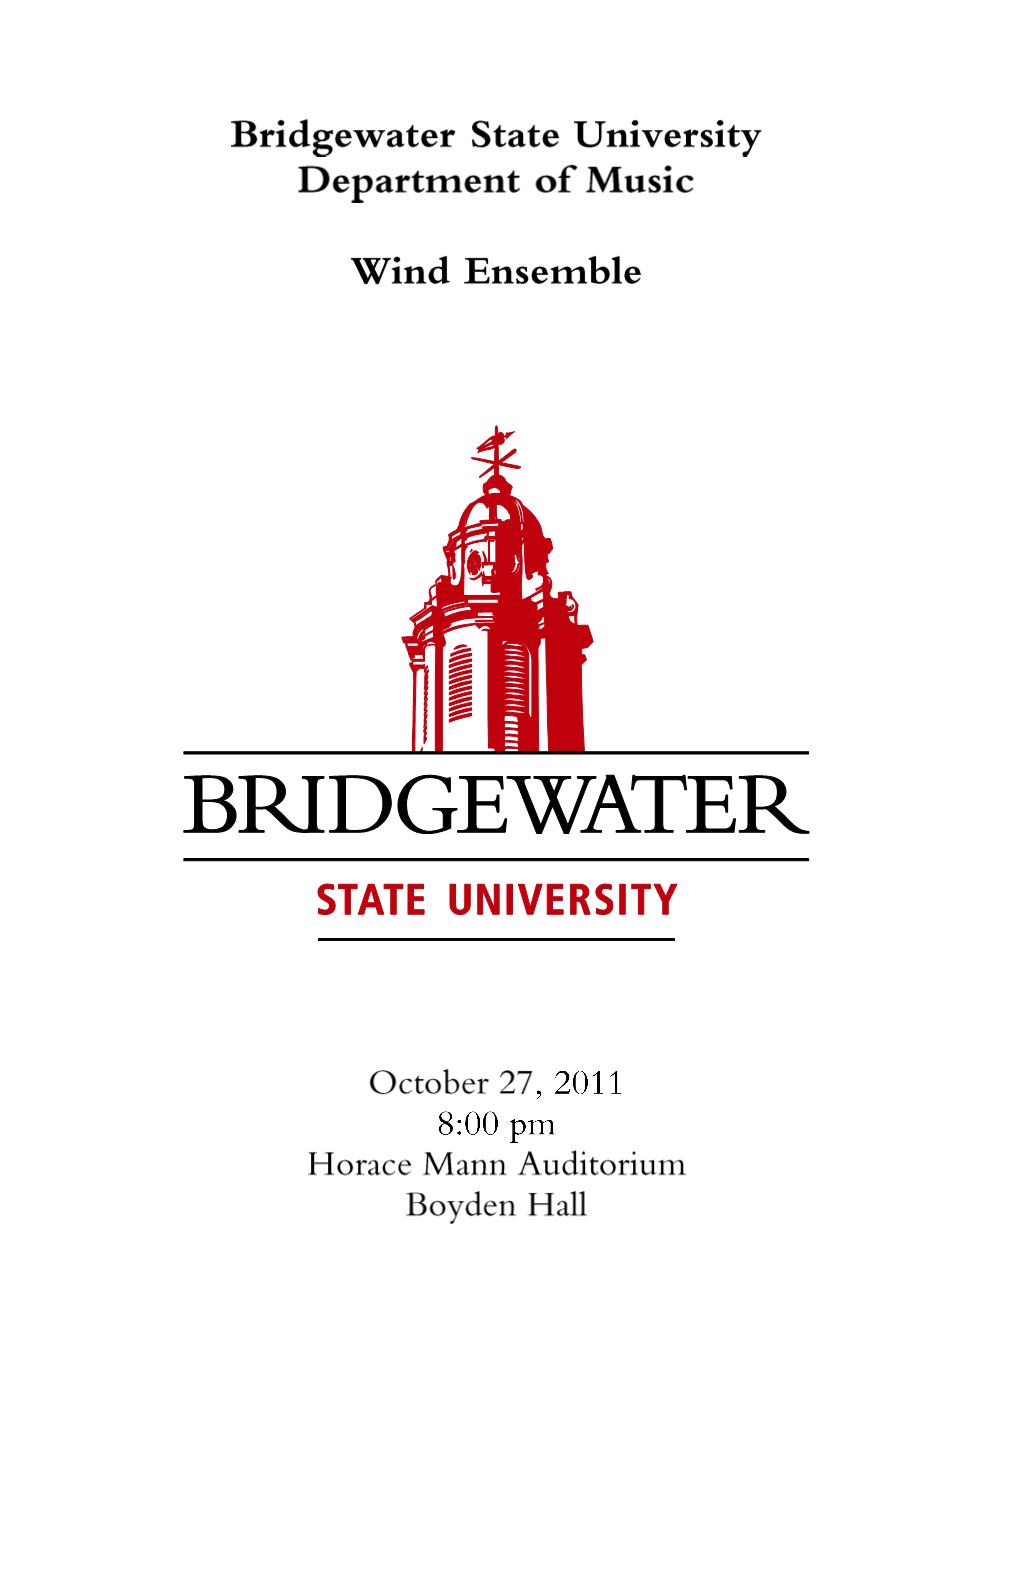 Bridgewater State University Wind Ensemble Concert